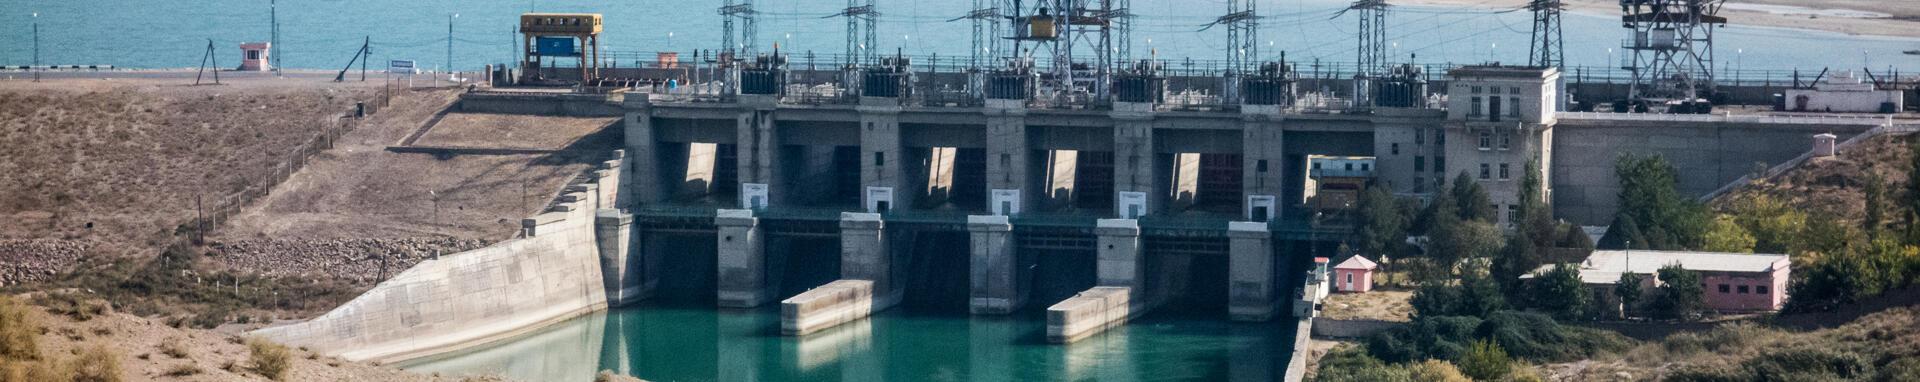 CIF Action Hydroelectric power plant at the Qairokkum dam, Tajikistan. Photo by EBRD/Chris Booth